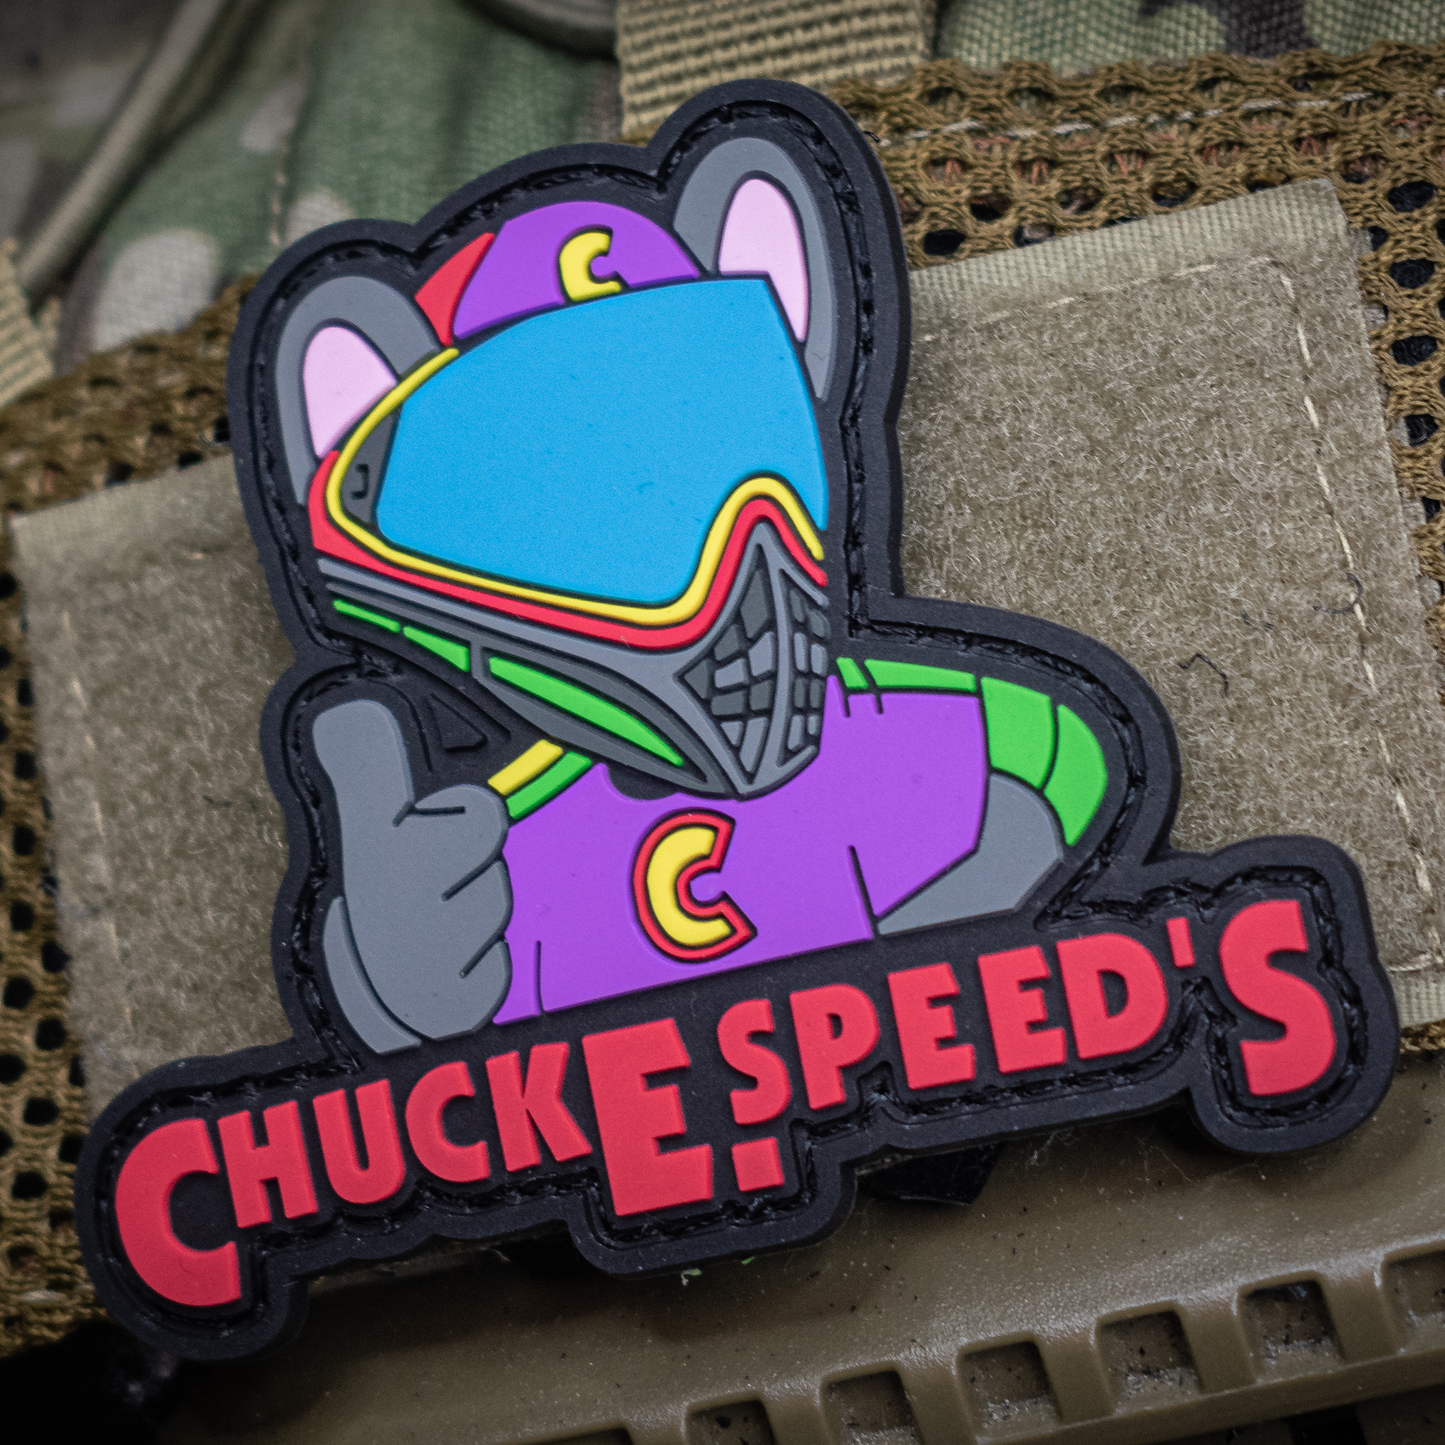 Chuck E Speed's